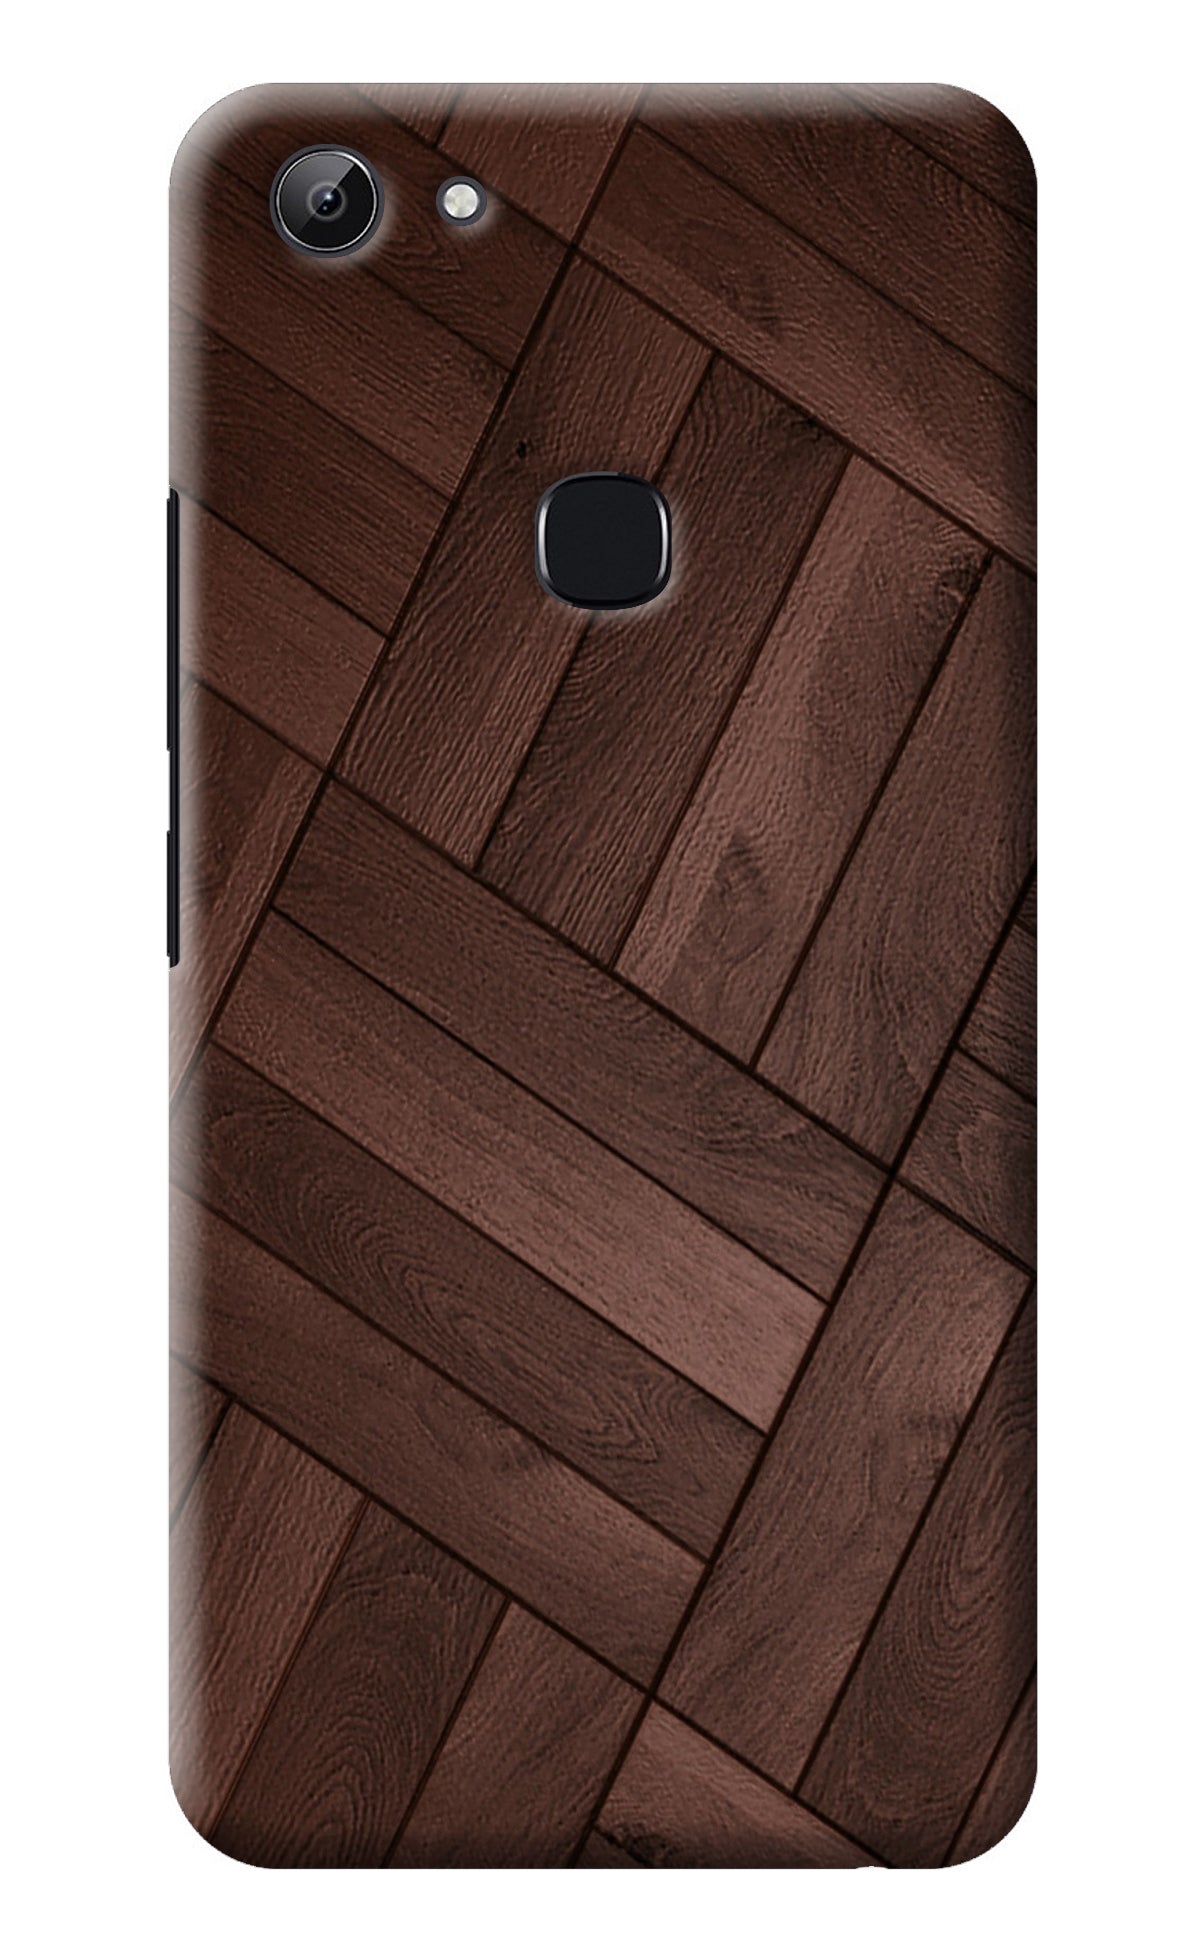 Wooden Texture Design Vivo Y83 Back Cover